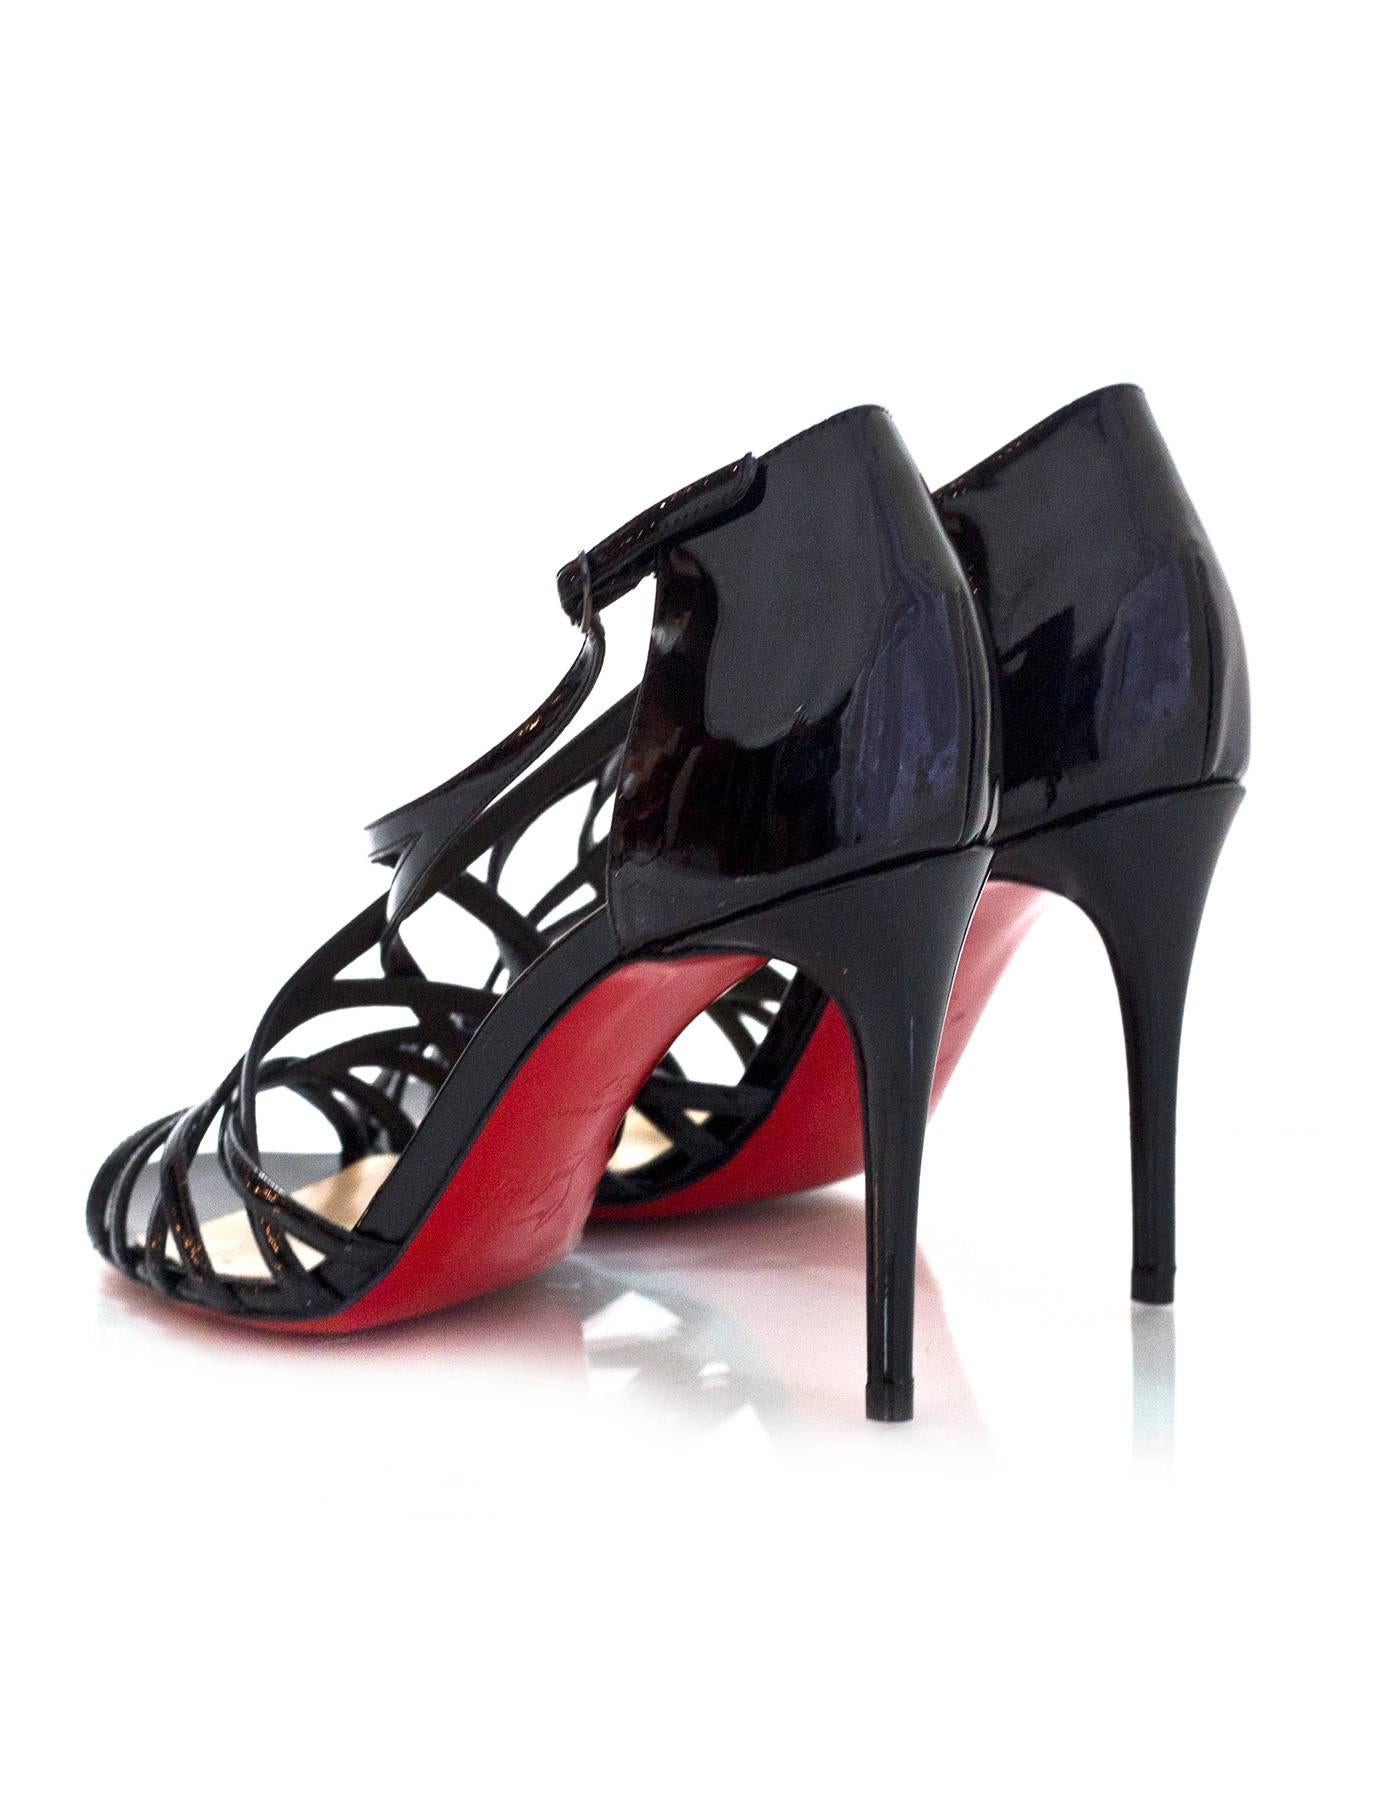 Women's Christian Louboutin NEW Black Patent Ete Sandals sz 37 NIB w/BOX/DB